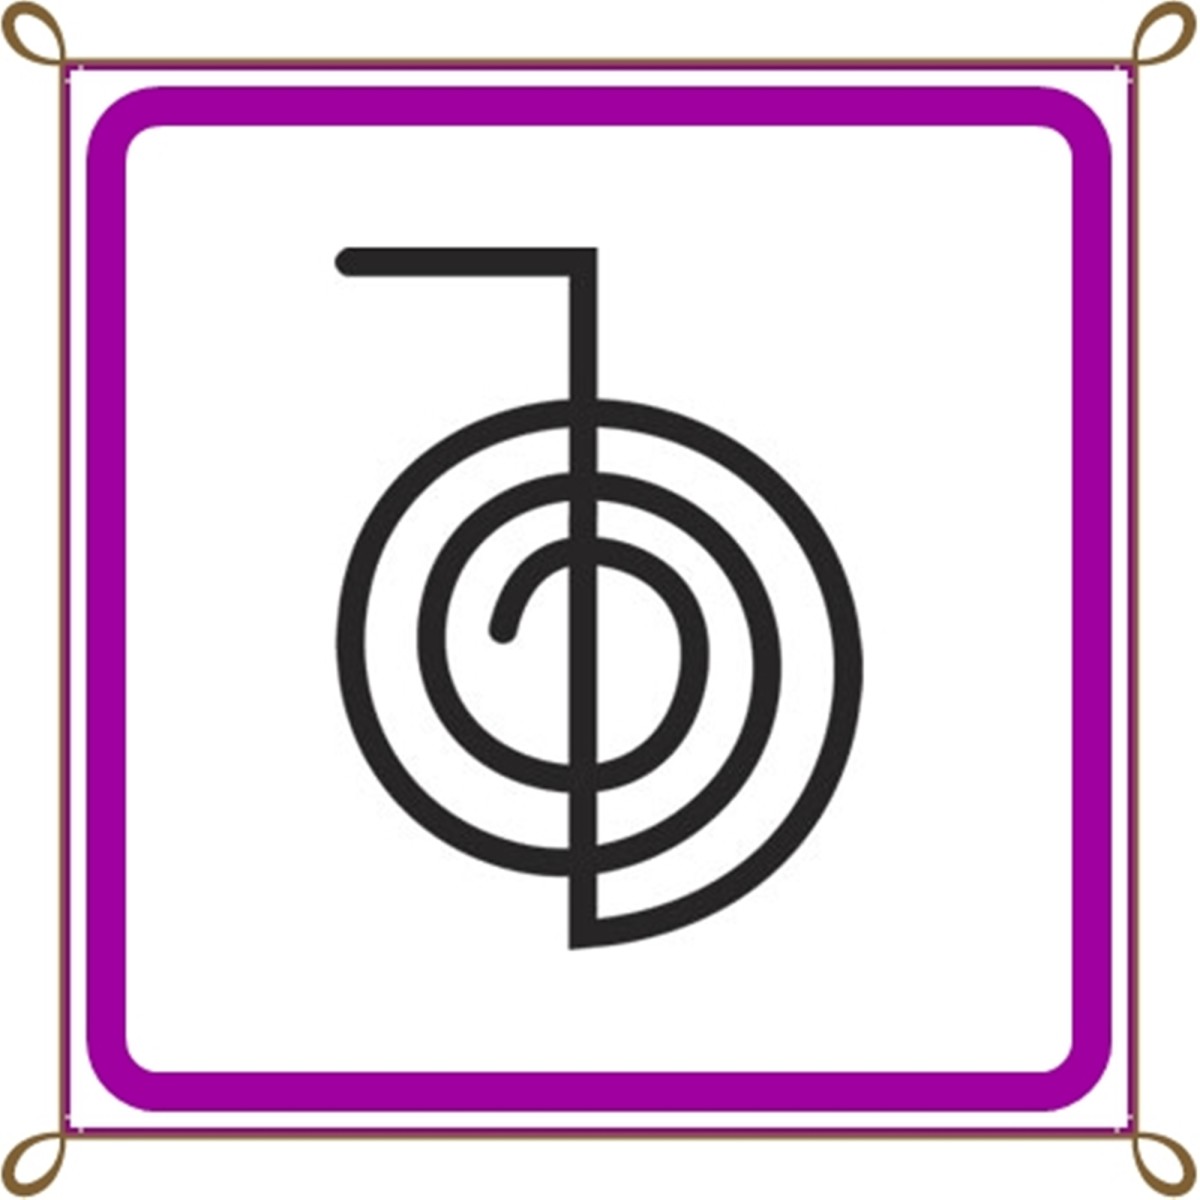 Cho Ku Rei Reiki Symbol